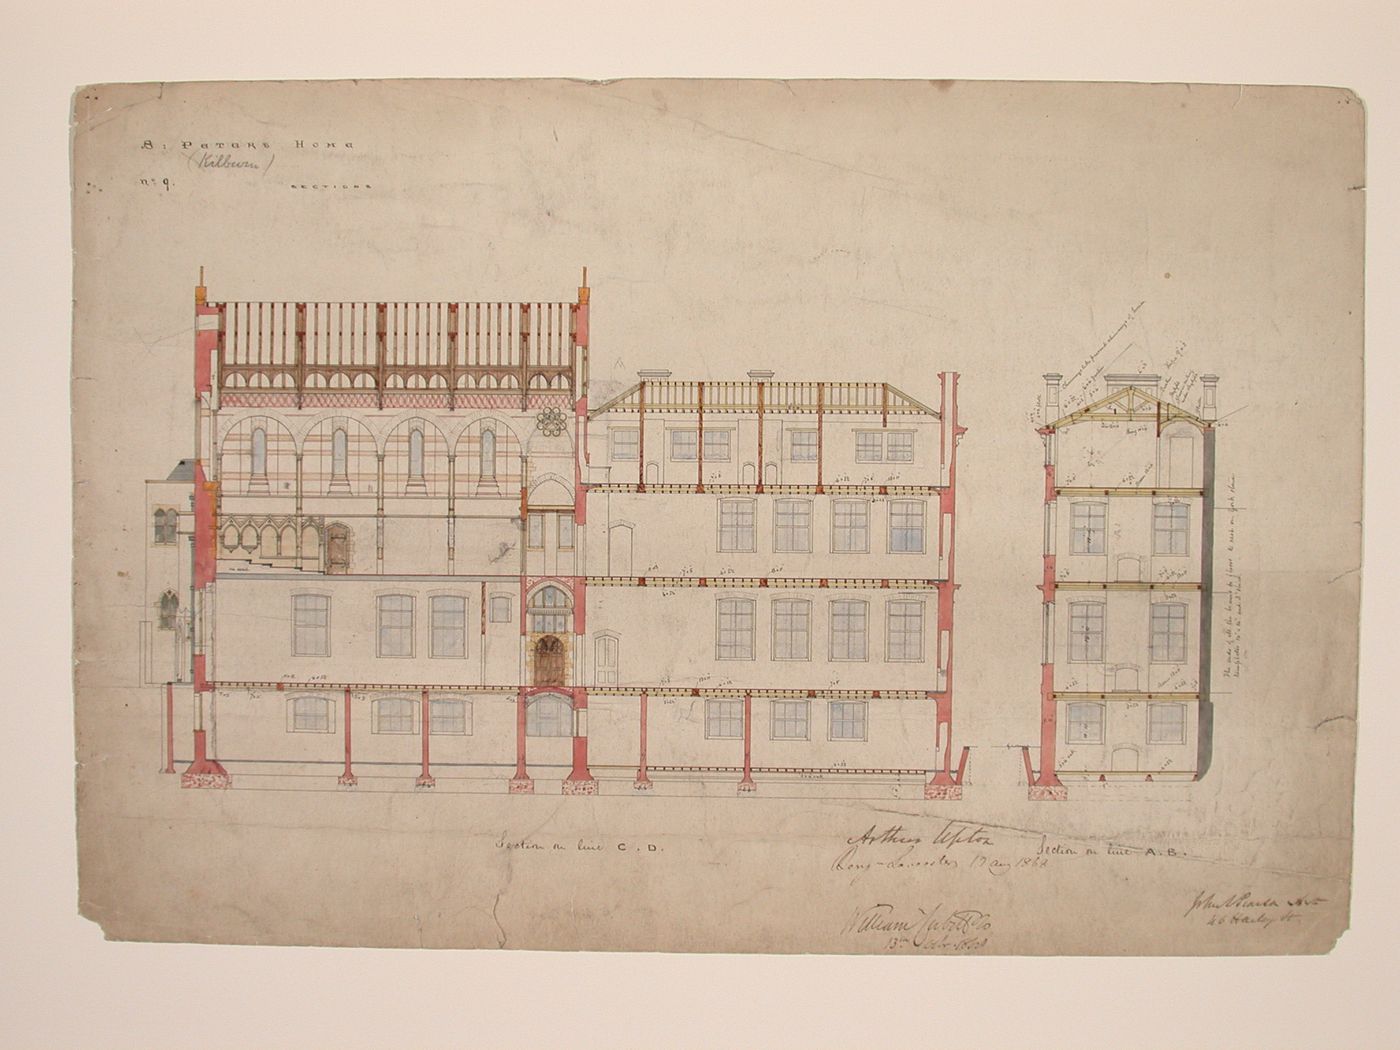 St. Peter's Home, Kilburn: Second floor plan